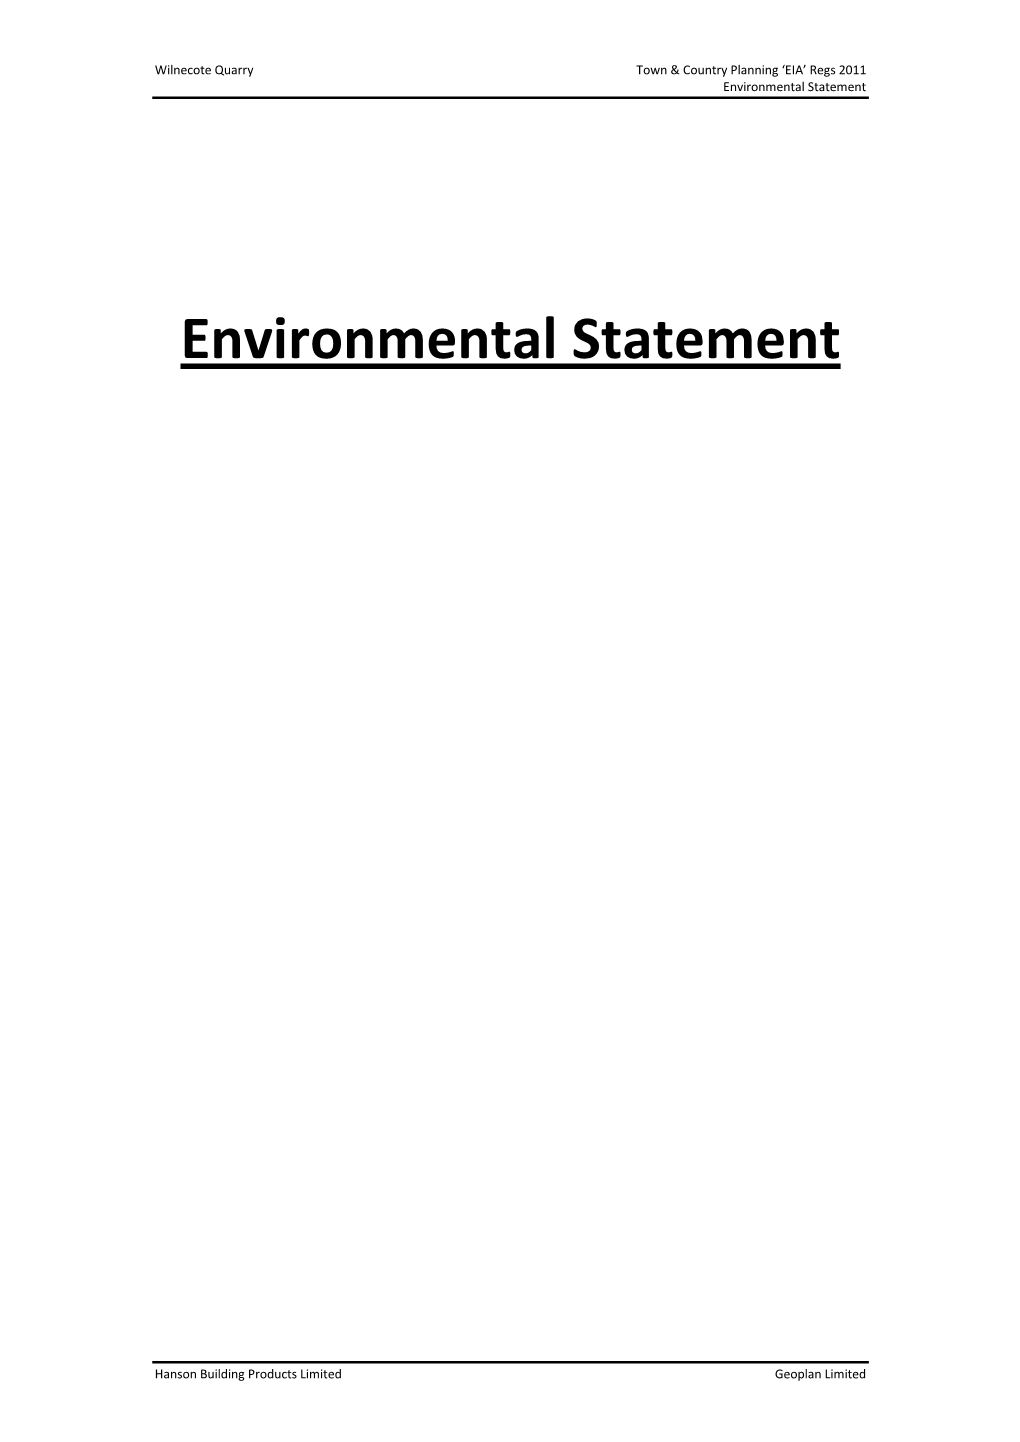 Environmental Assessment 1